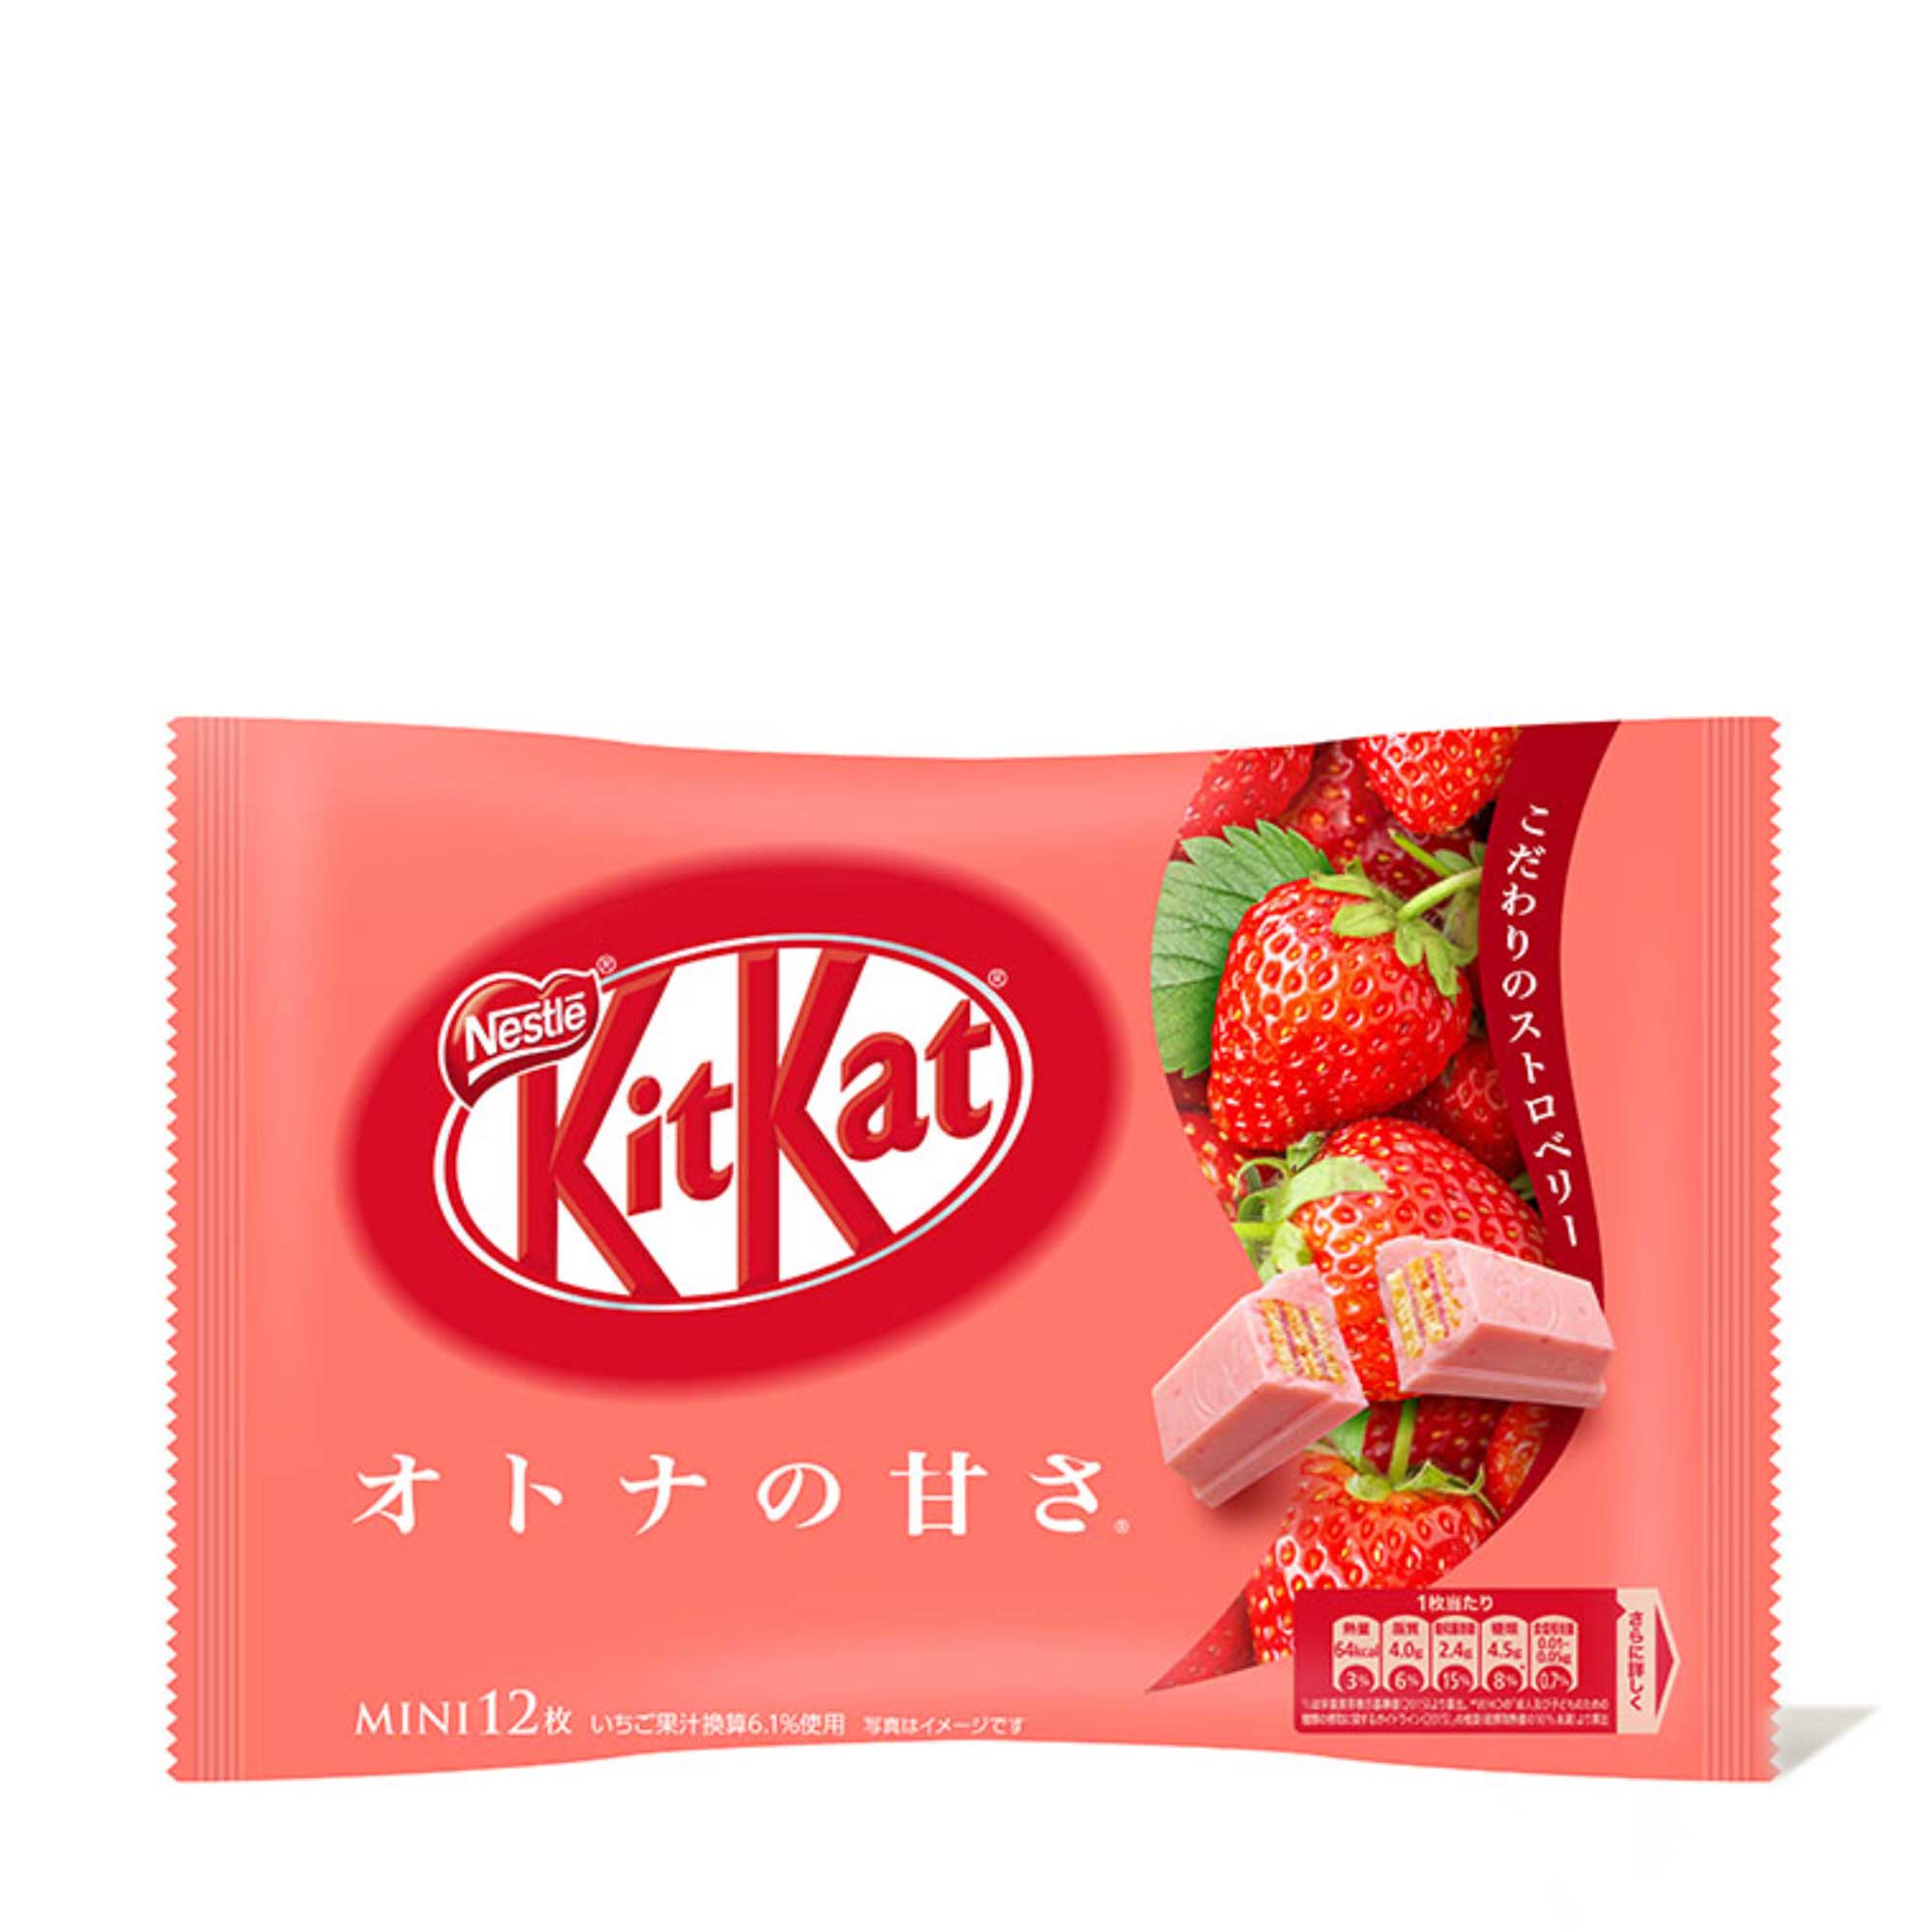 Japan Kit Kat - Strawberry